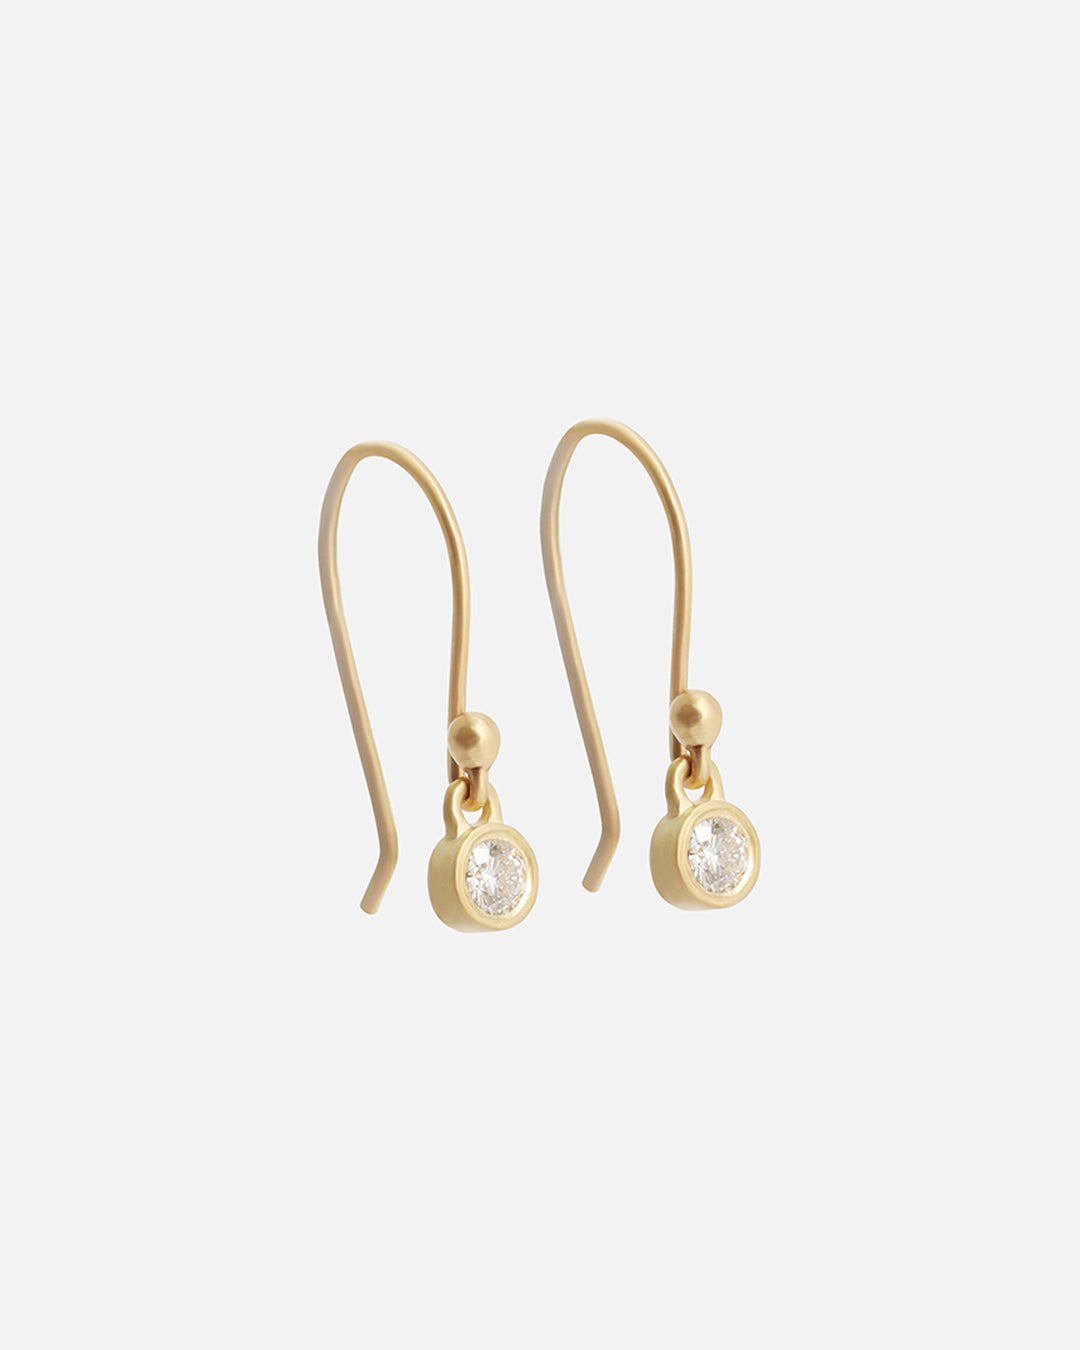 Hanging Diamond / Earrings By Tricia Kirkland